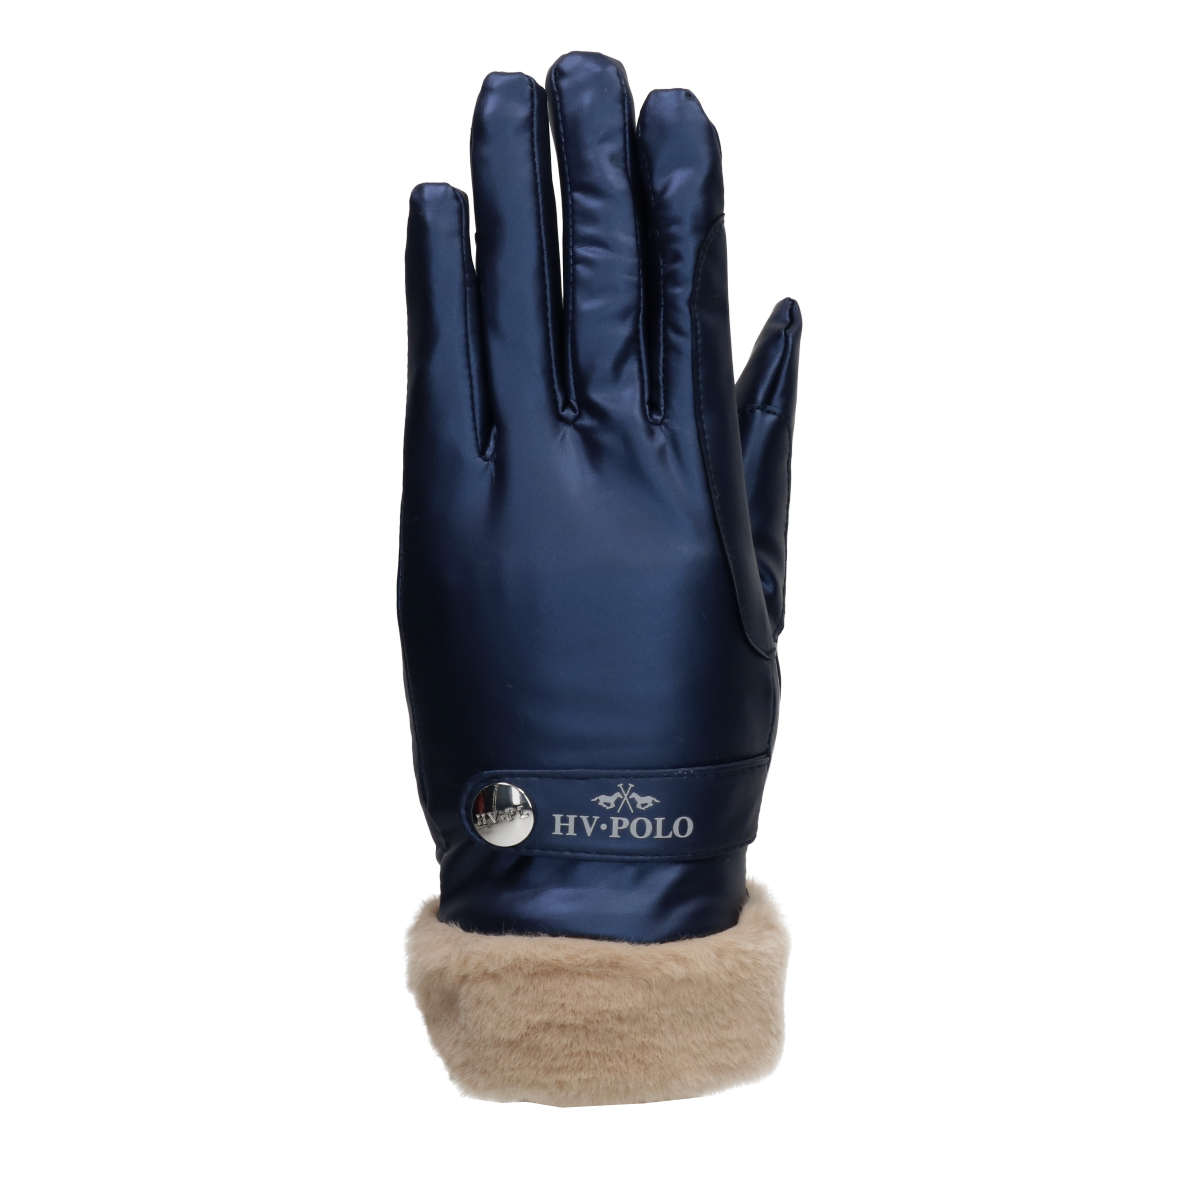 Handschoenen Hv Polo Hvpgarnet Glam Donkerblauw, XL in donkerblauw